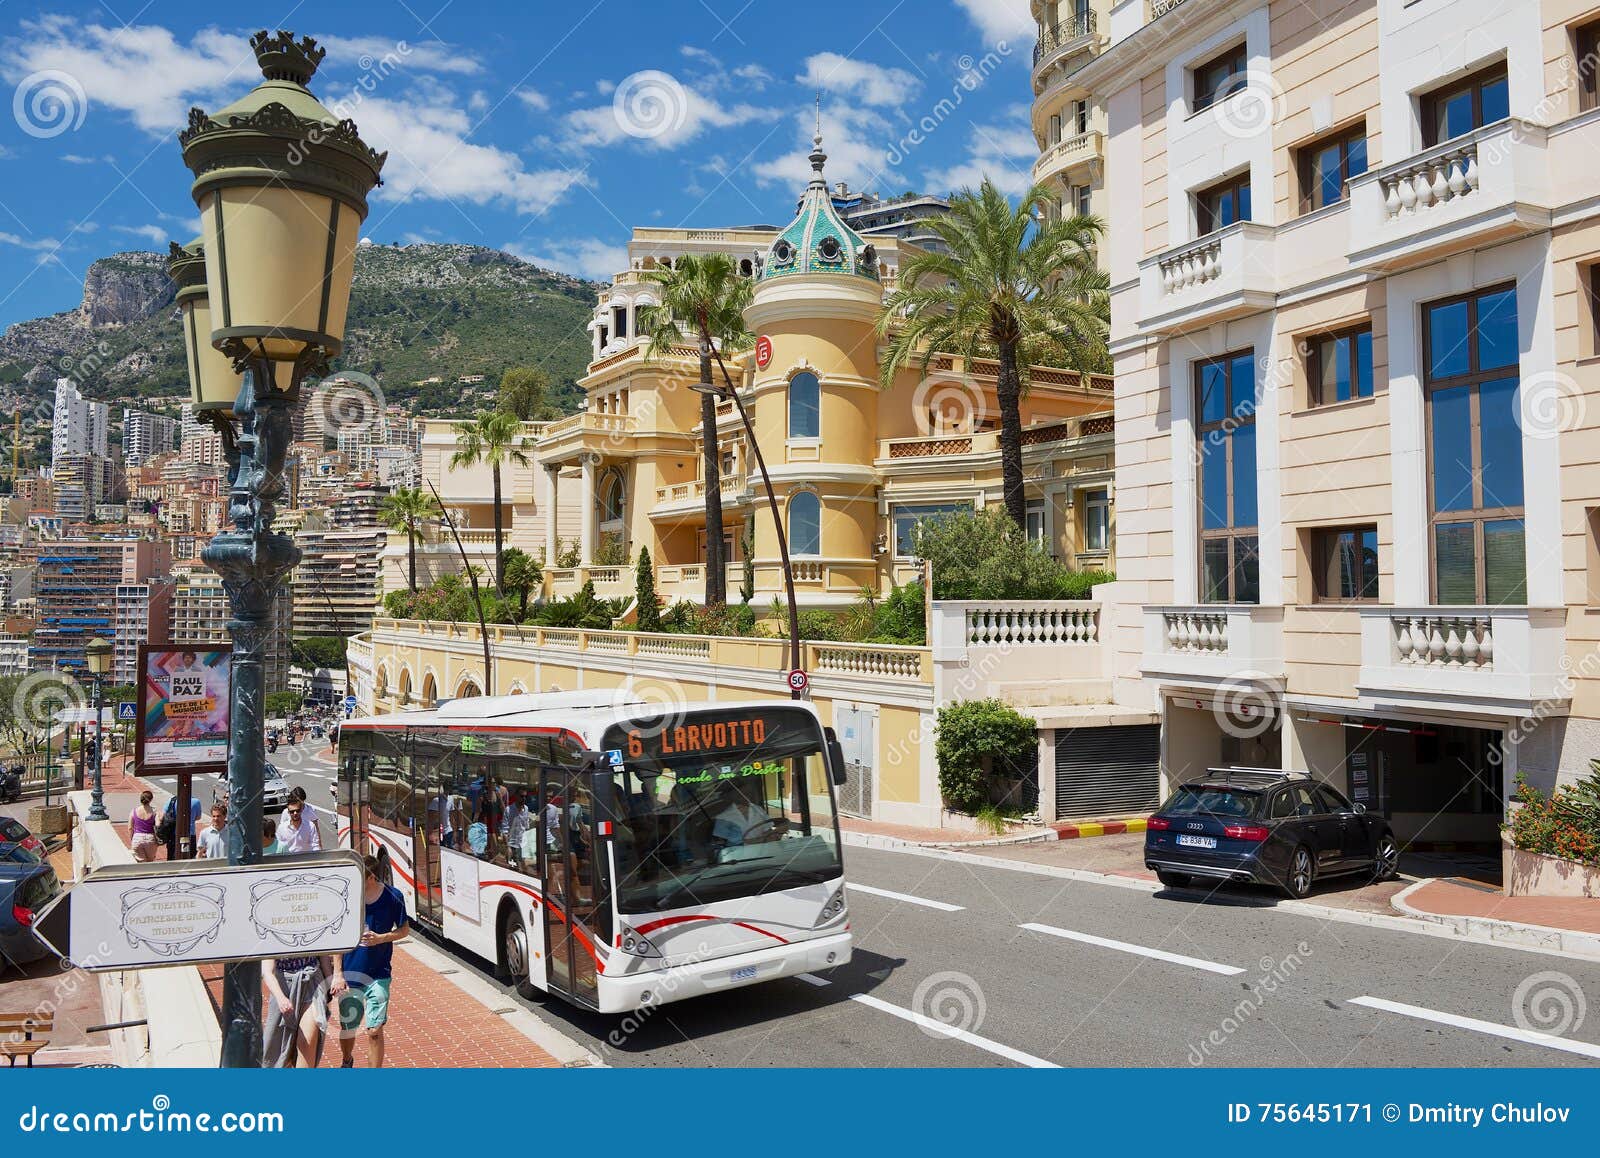 Public Transportation Bus Passes By The Street In Monaco, Monaco ...